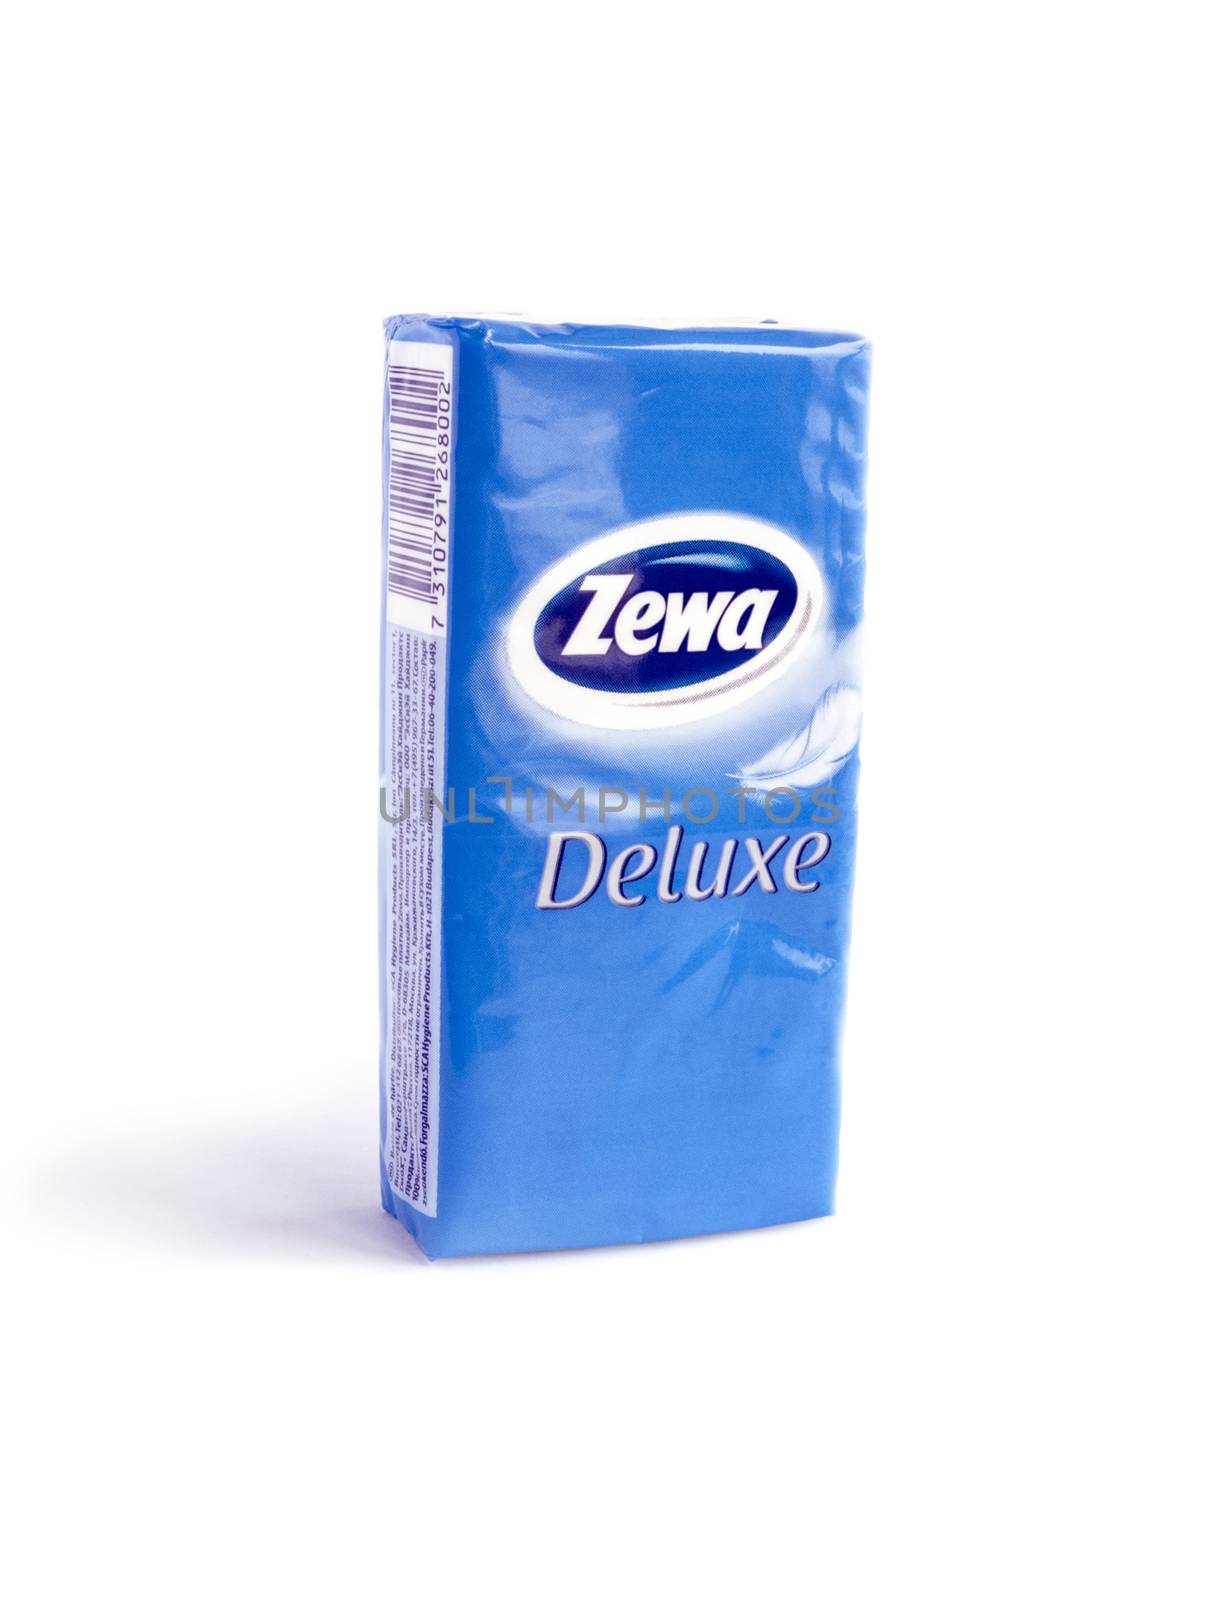 Pack of Zewa Deluxe napkins isolated on white background by maxmitzu